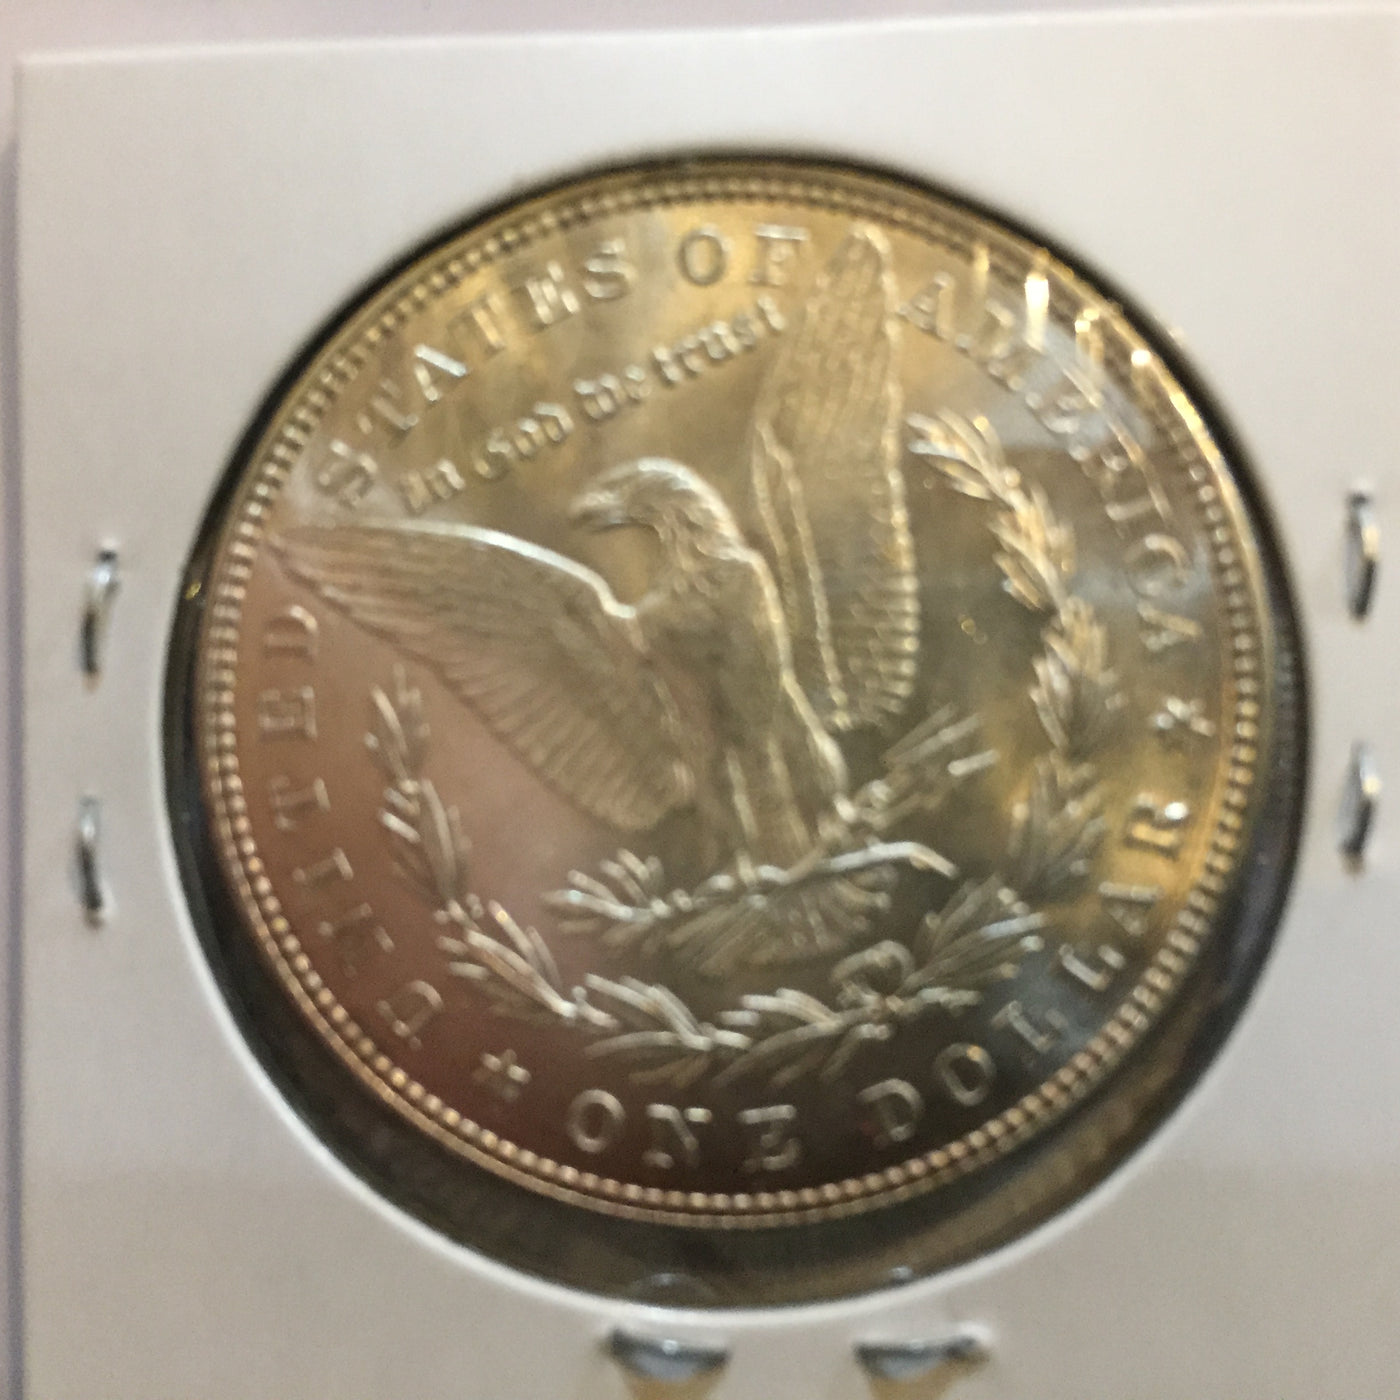 Morgan Dollar 1887 brilliant uncirculated Philadelphia - reverse